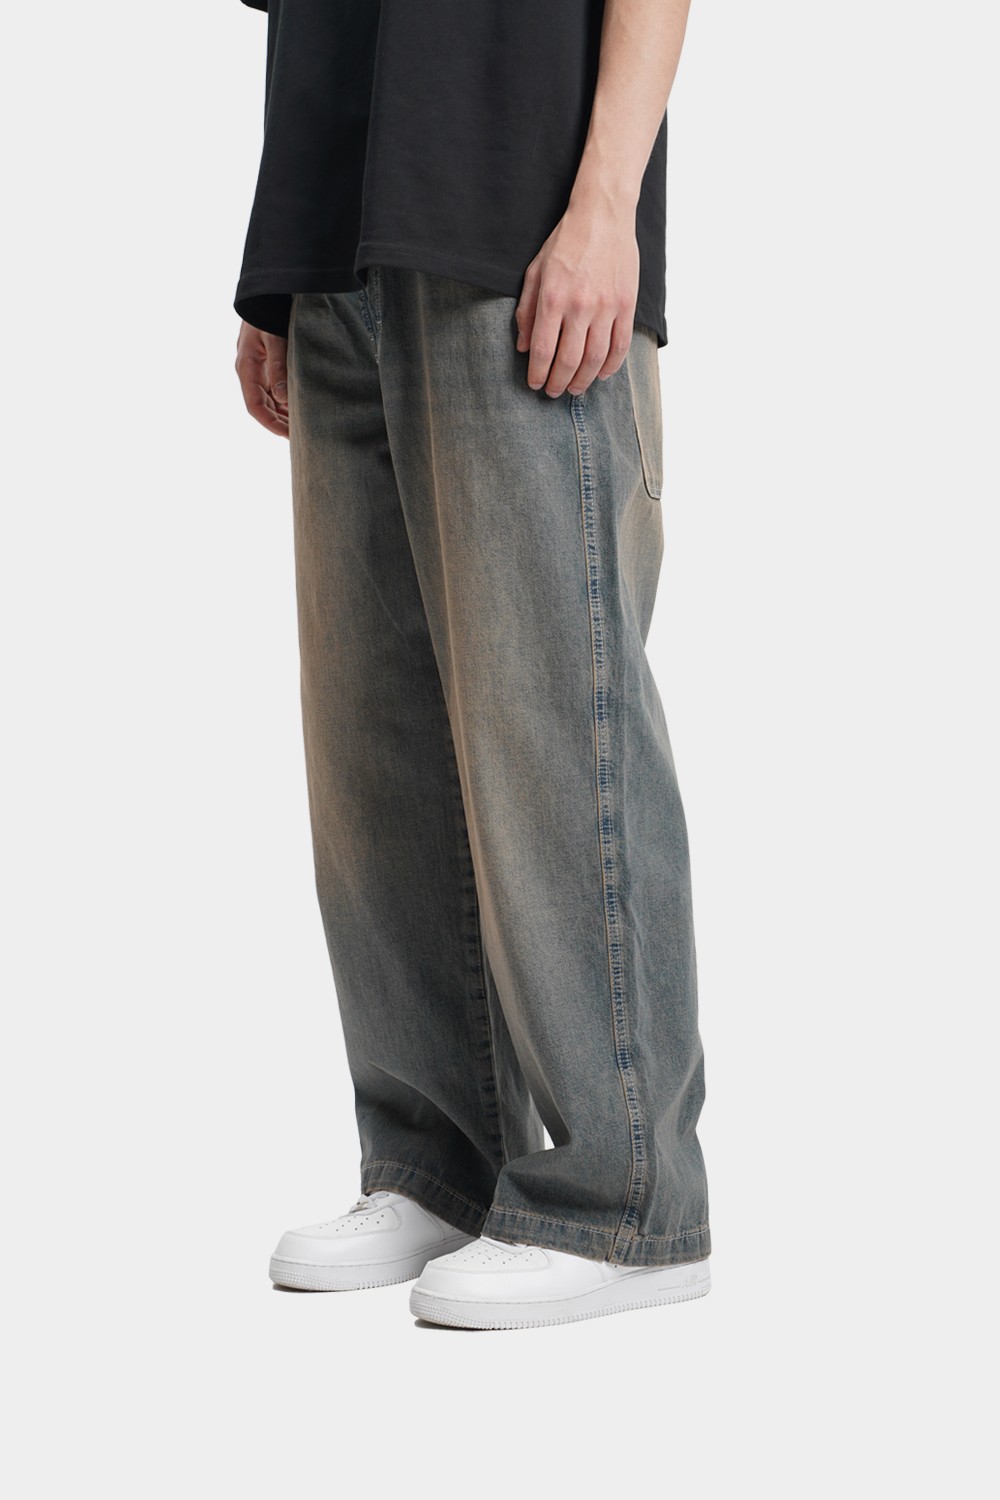 Ultra Baggy Tinted Neo Skate Jean (URBN-B-172)